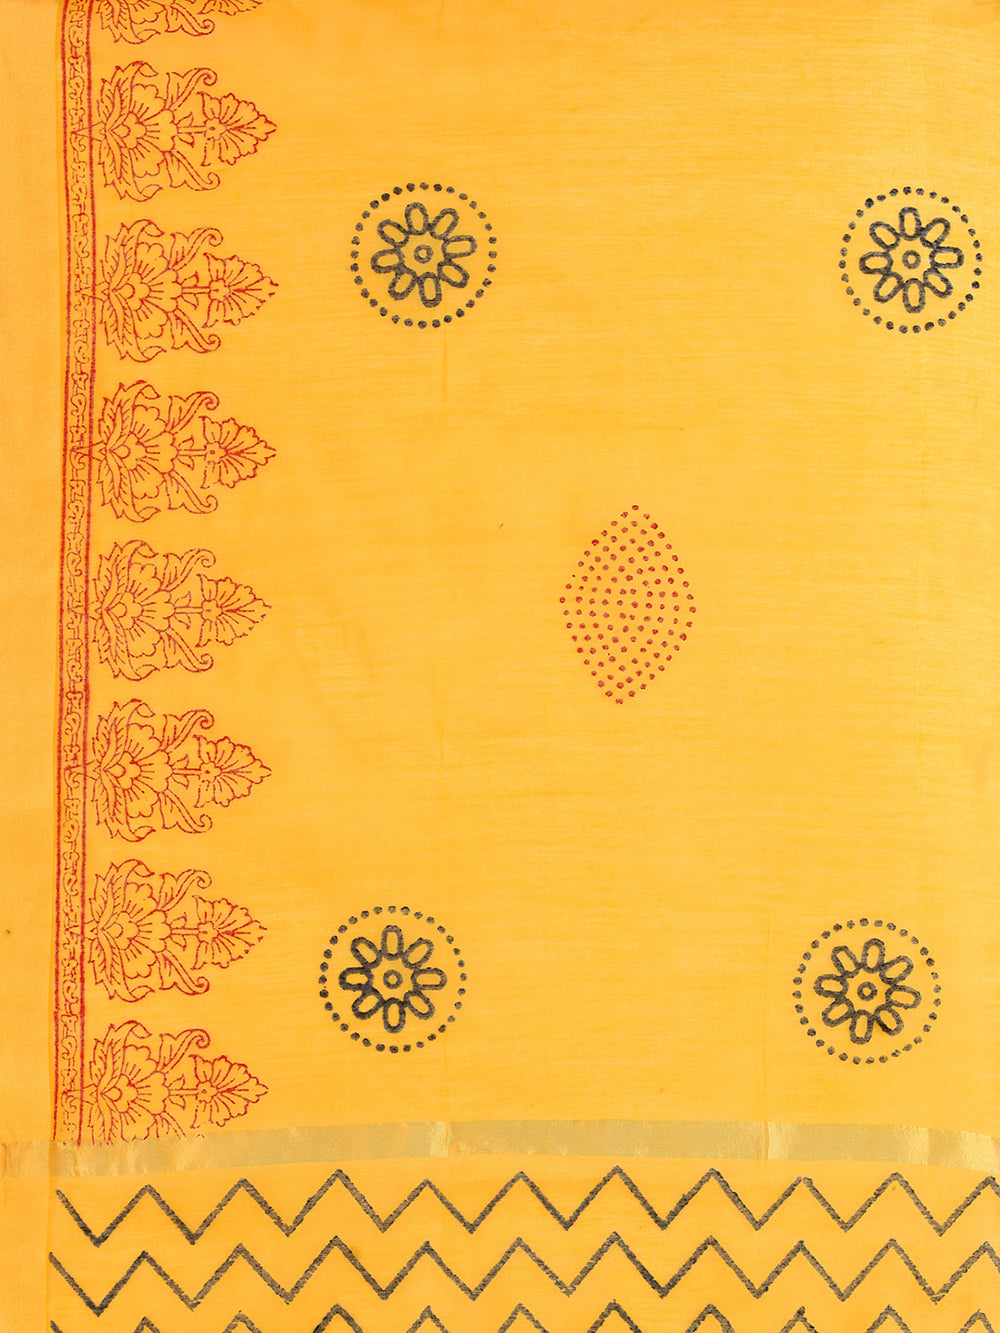 Women's Yellow  Block Print Woven Cotton Silk Dupatta - NIMIDHYA